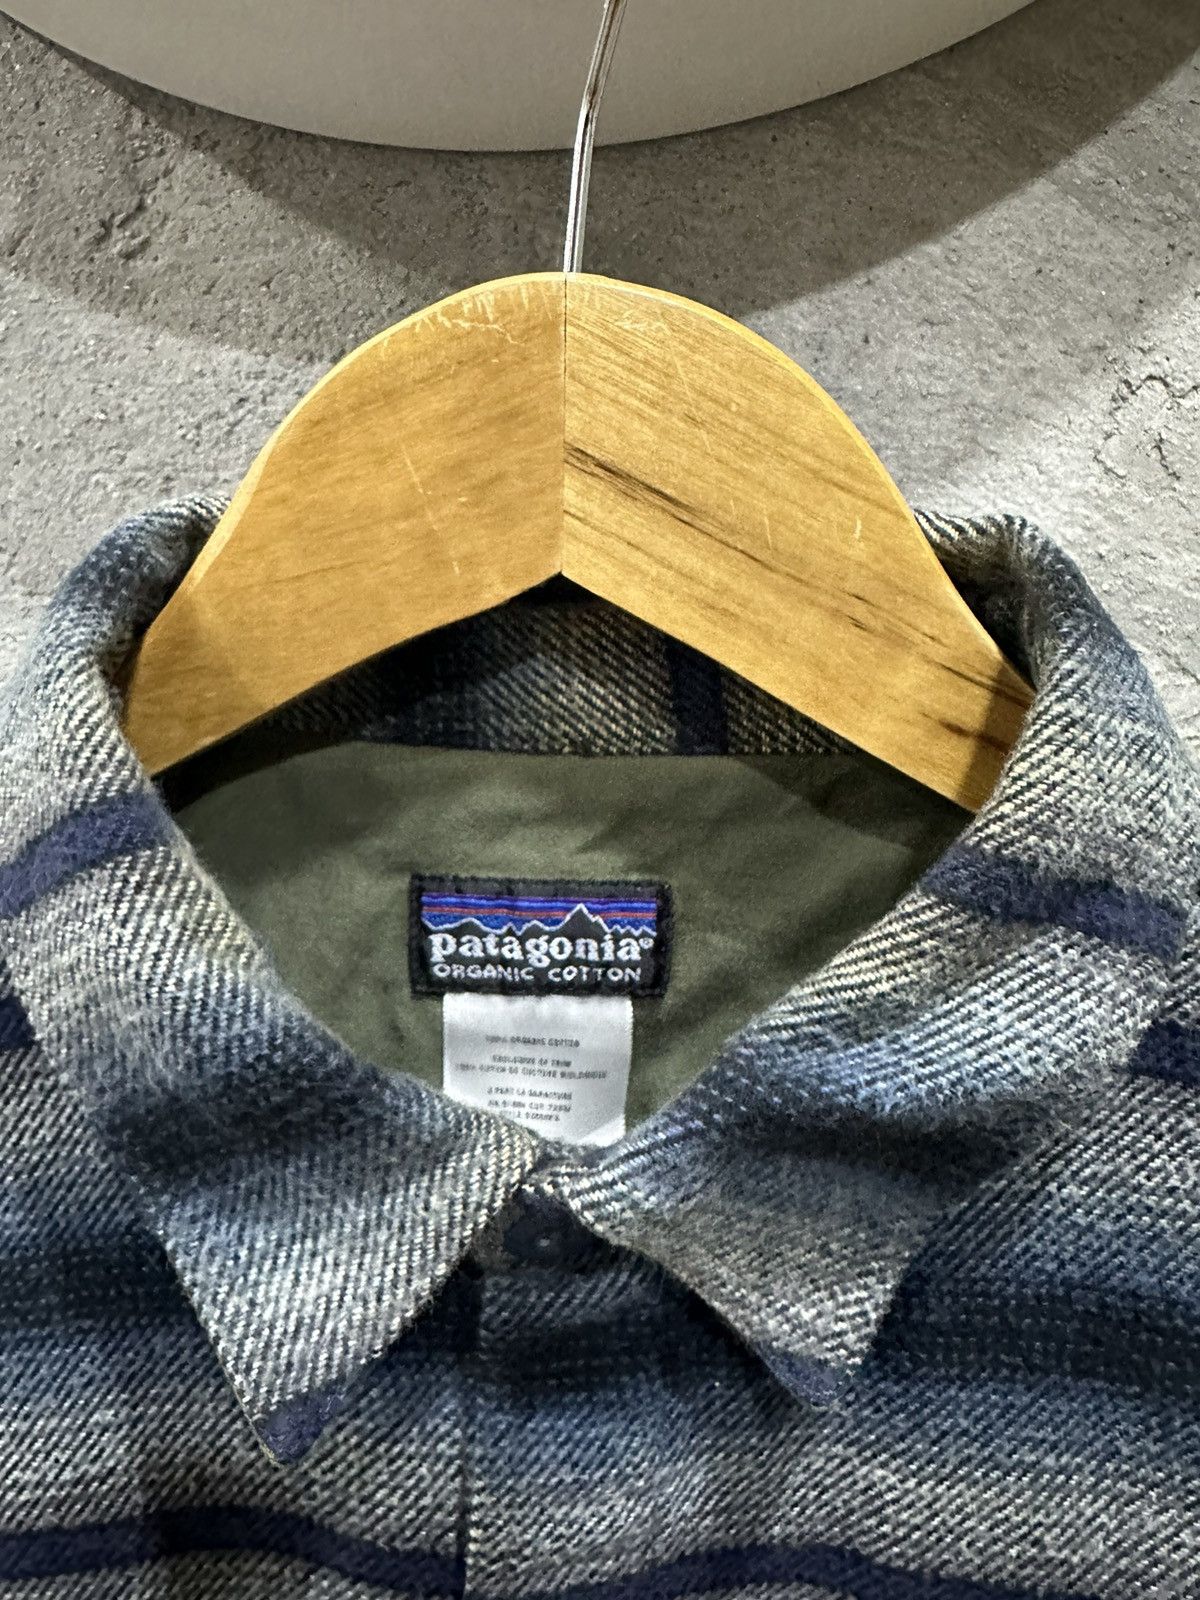 Patagonia Heavy Organic Cotton Flannel Shirt - 3